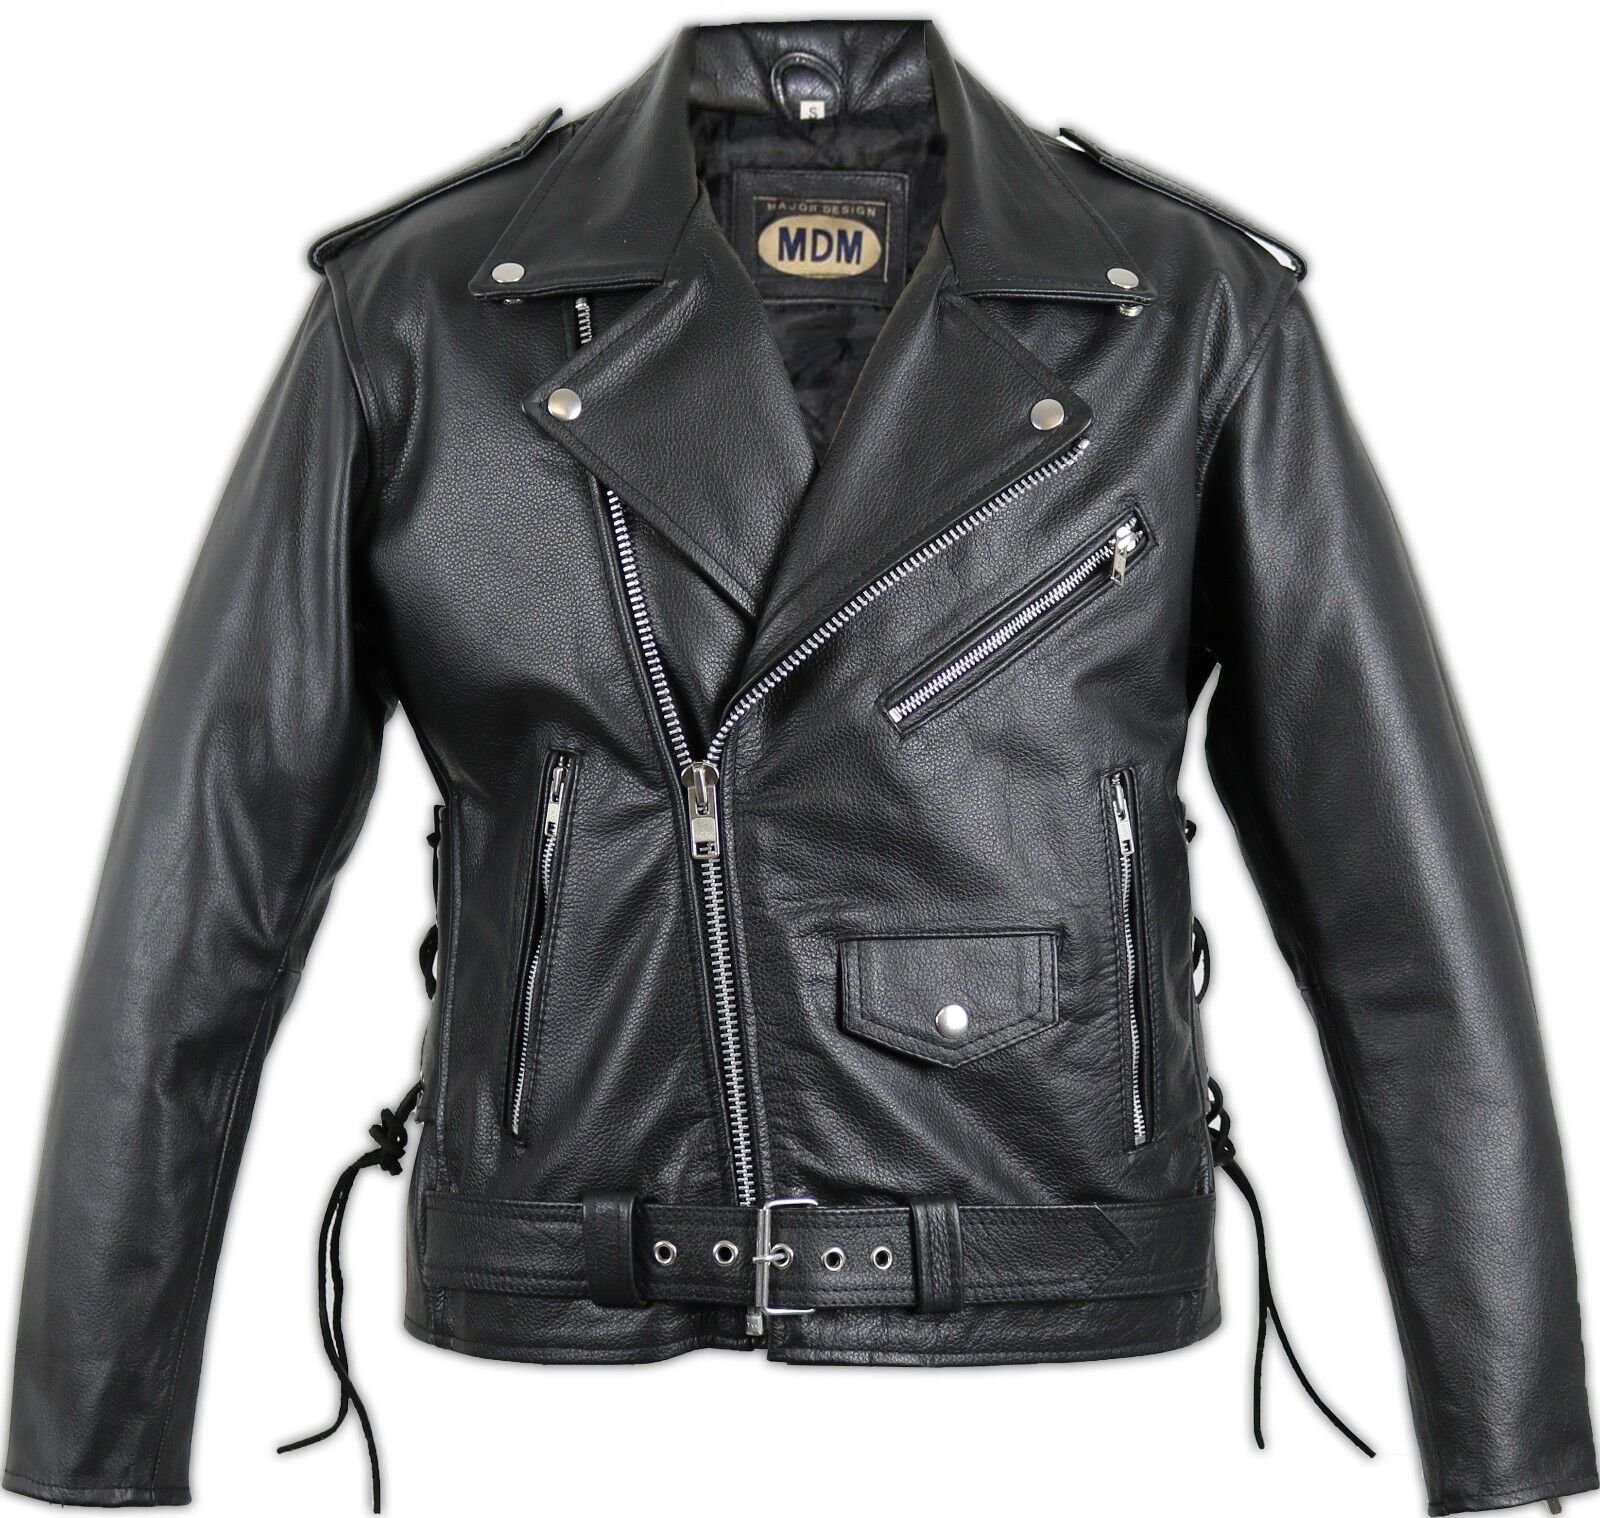 CozzyCo-Black-Biker-Jacket-Edgy-Style